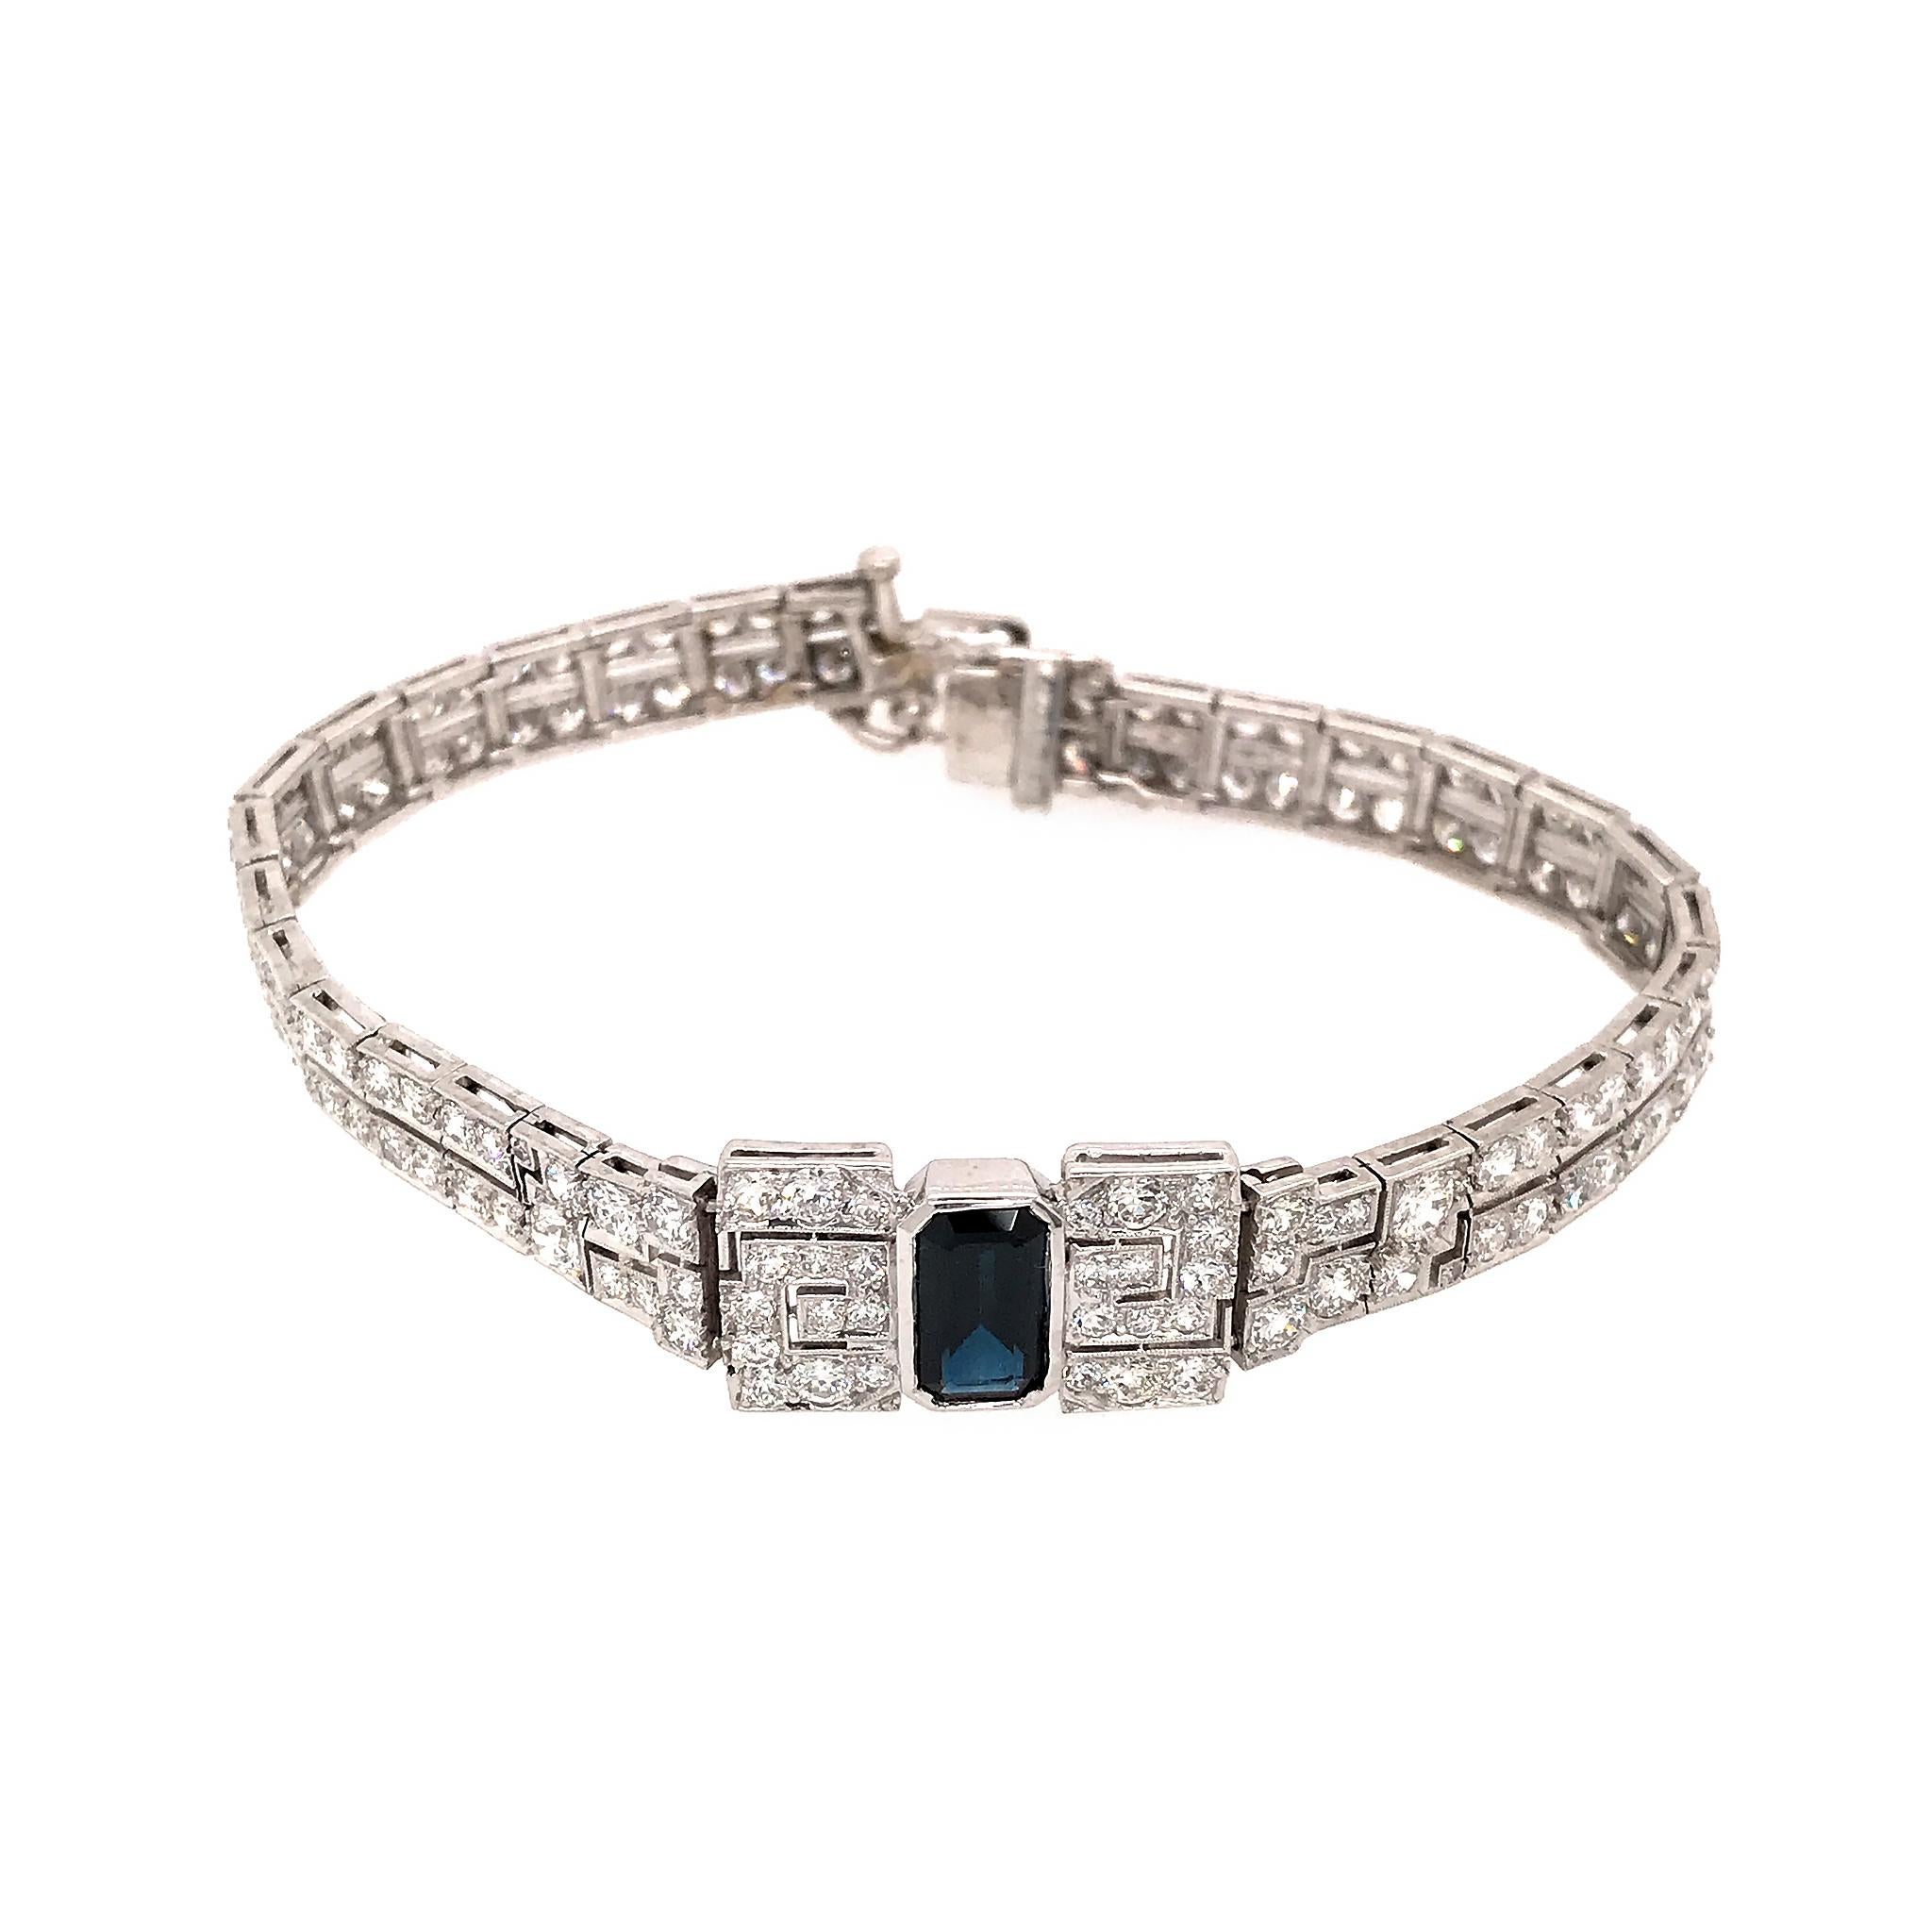 Platinum
Sapphire: 2.10 ct twd
Diamond: 4.15 ct twd 
Color: F
Clarity: VS1
Bracelet Length: 7.5 inches